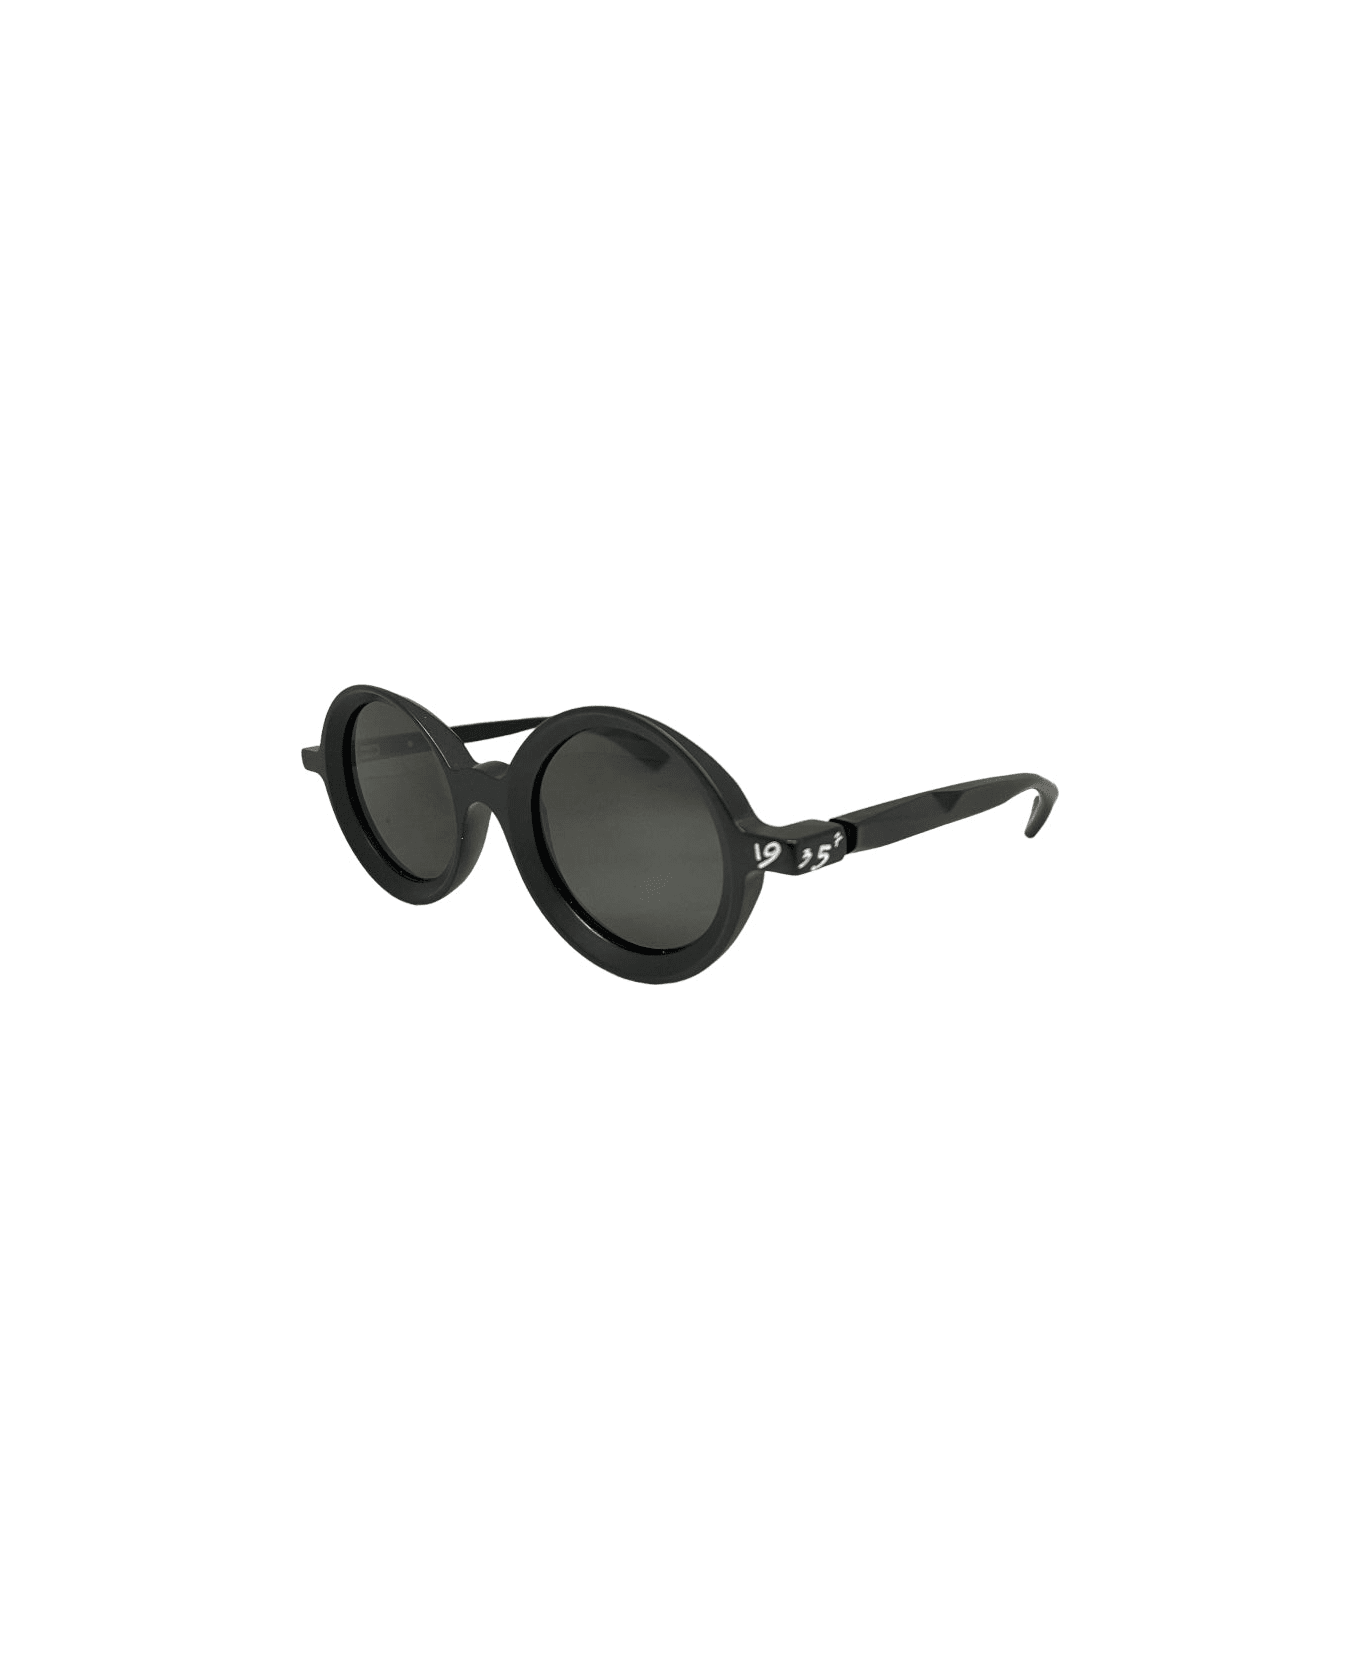 Piero Massaro Pm372 - Matte Black Sunglasses サングラス